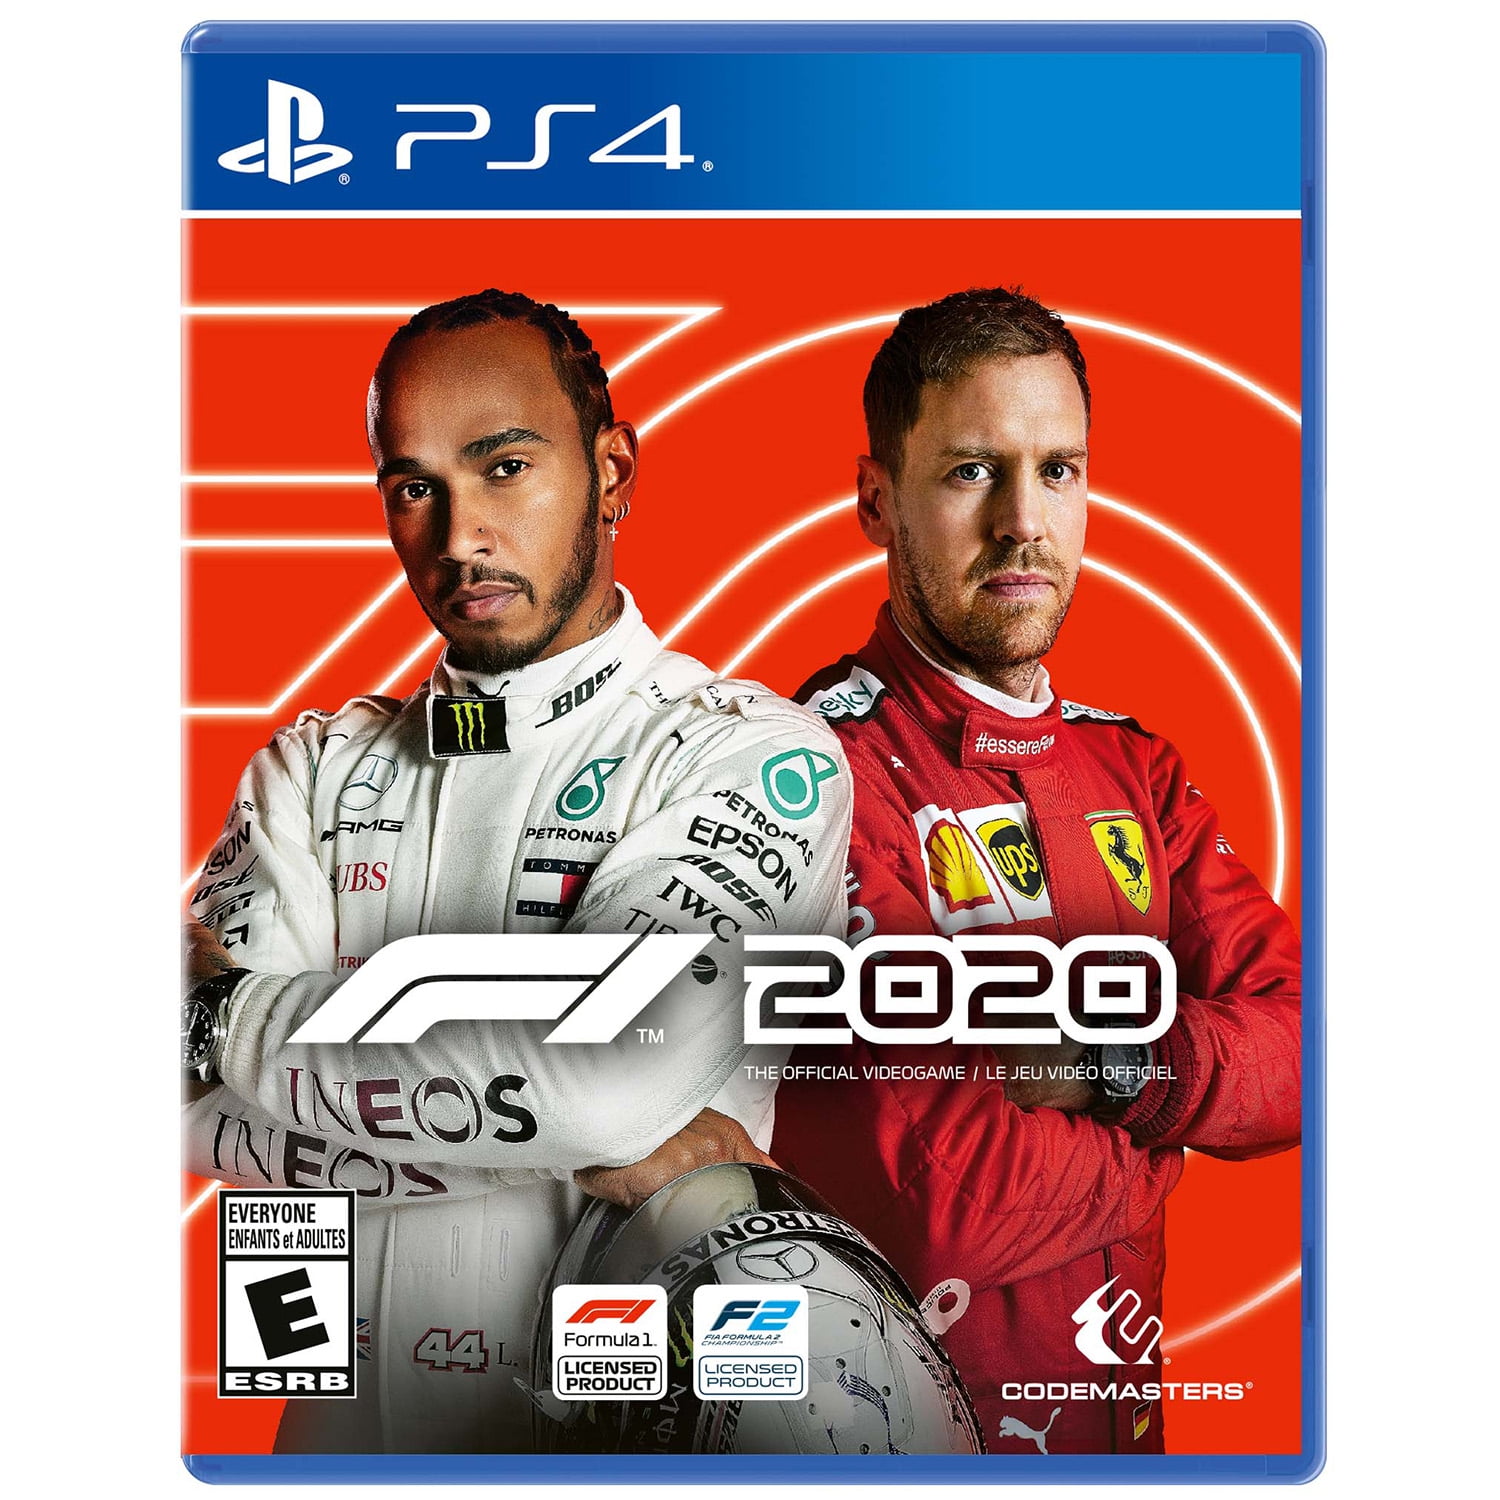 F1 2020, Codemasters, 4, 816819017722, New & Sealed Walmart.com